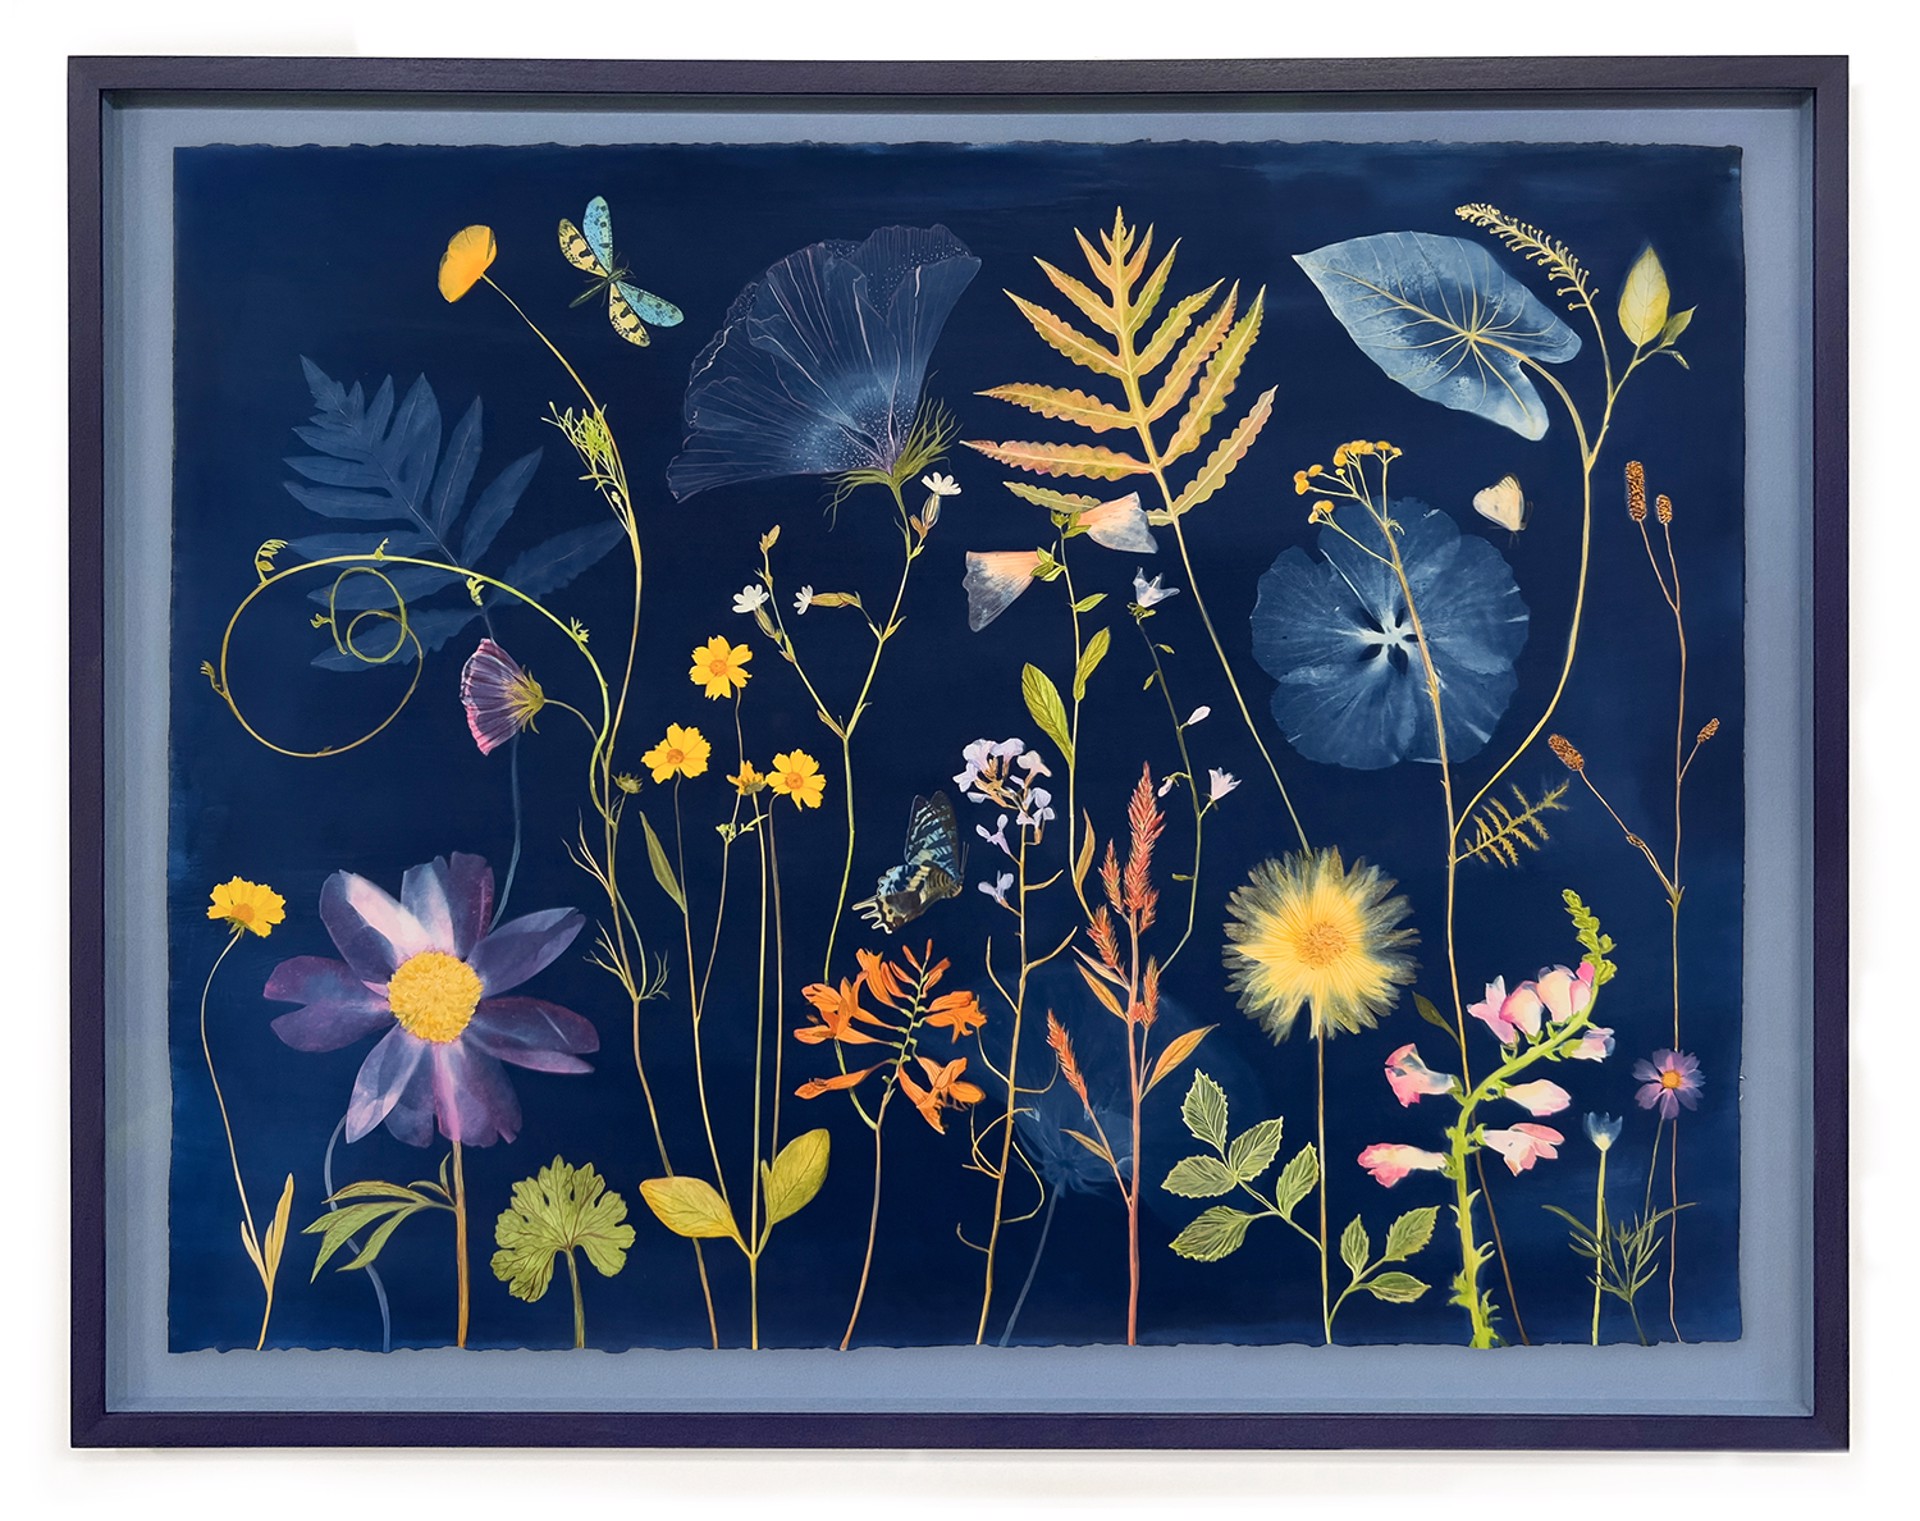 Nocturnal Nature (Dahlia, Helenium, Peony, Montbretia, Pollinators) by Julia Whitney Barnes